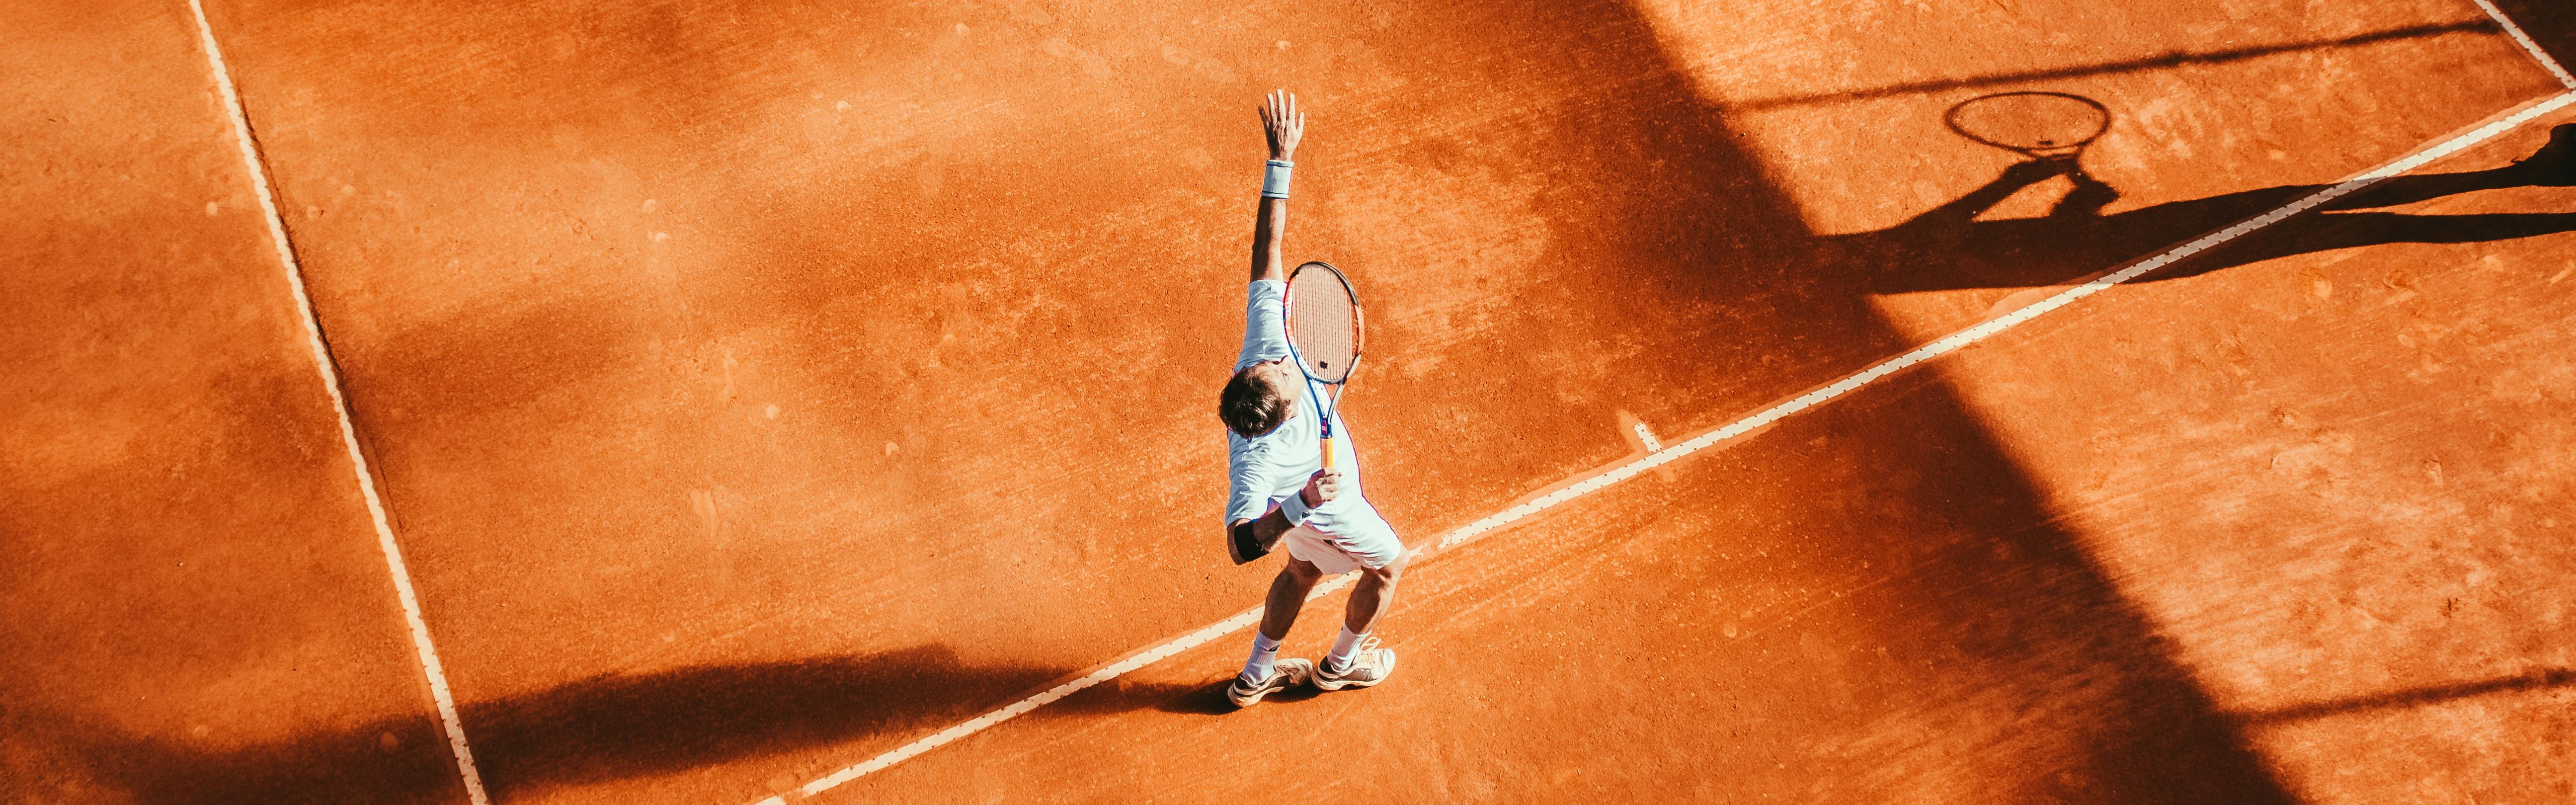 A tennis player hitting a tennis ball. 